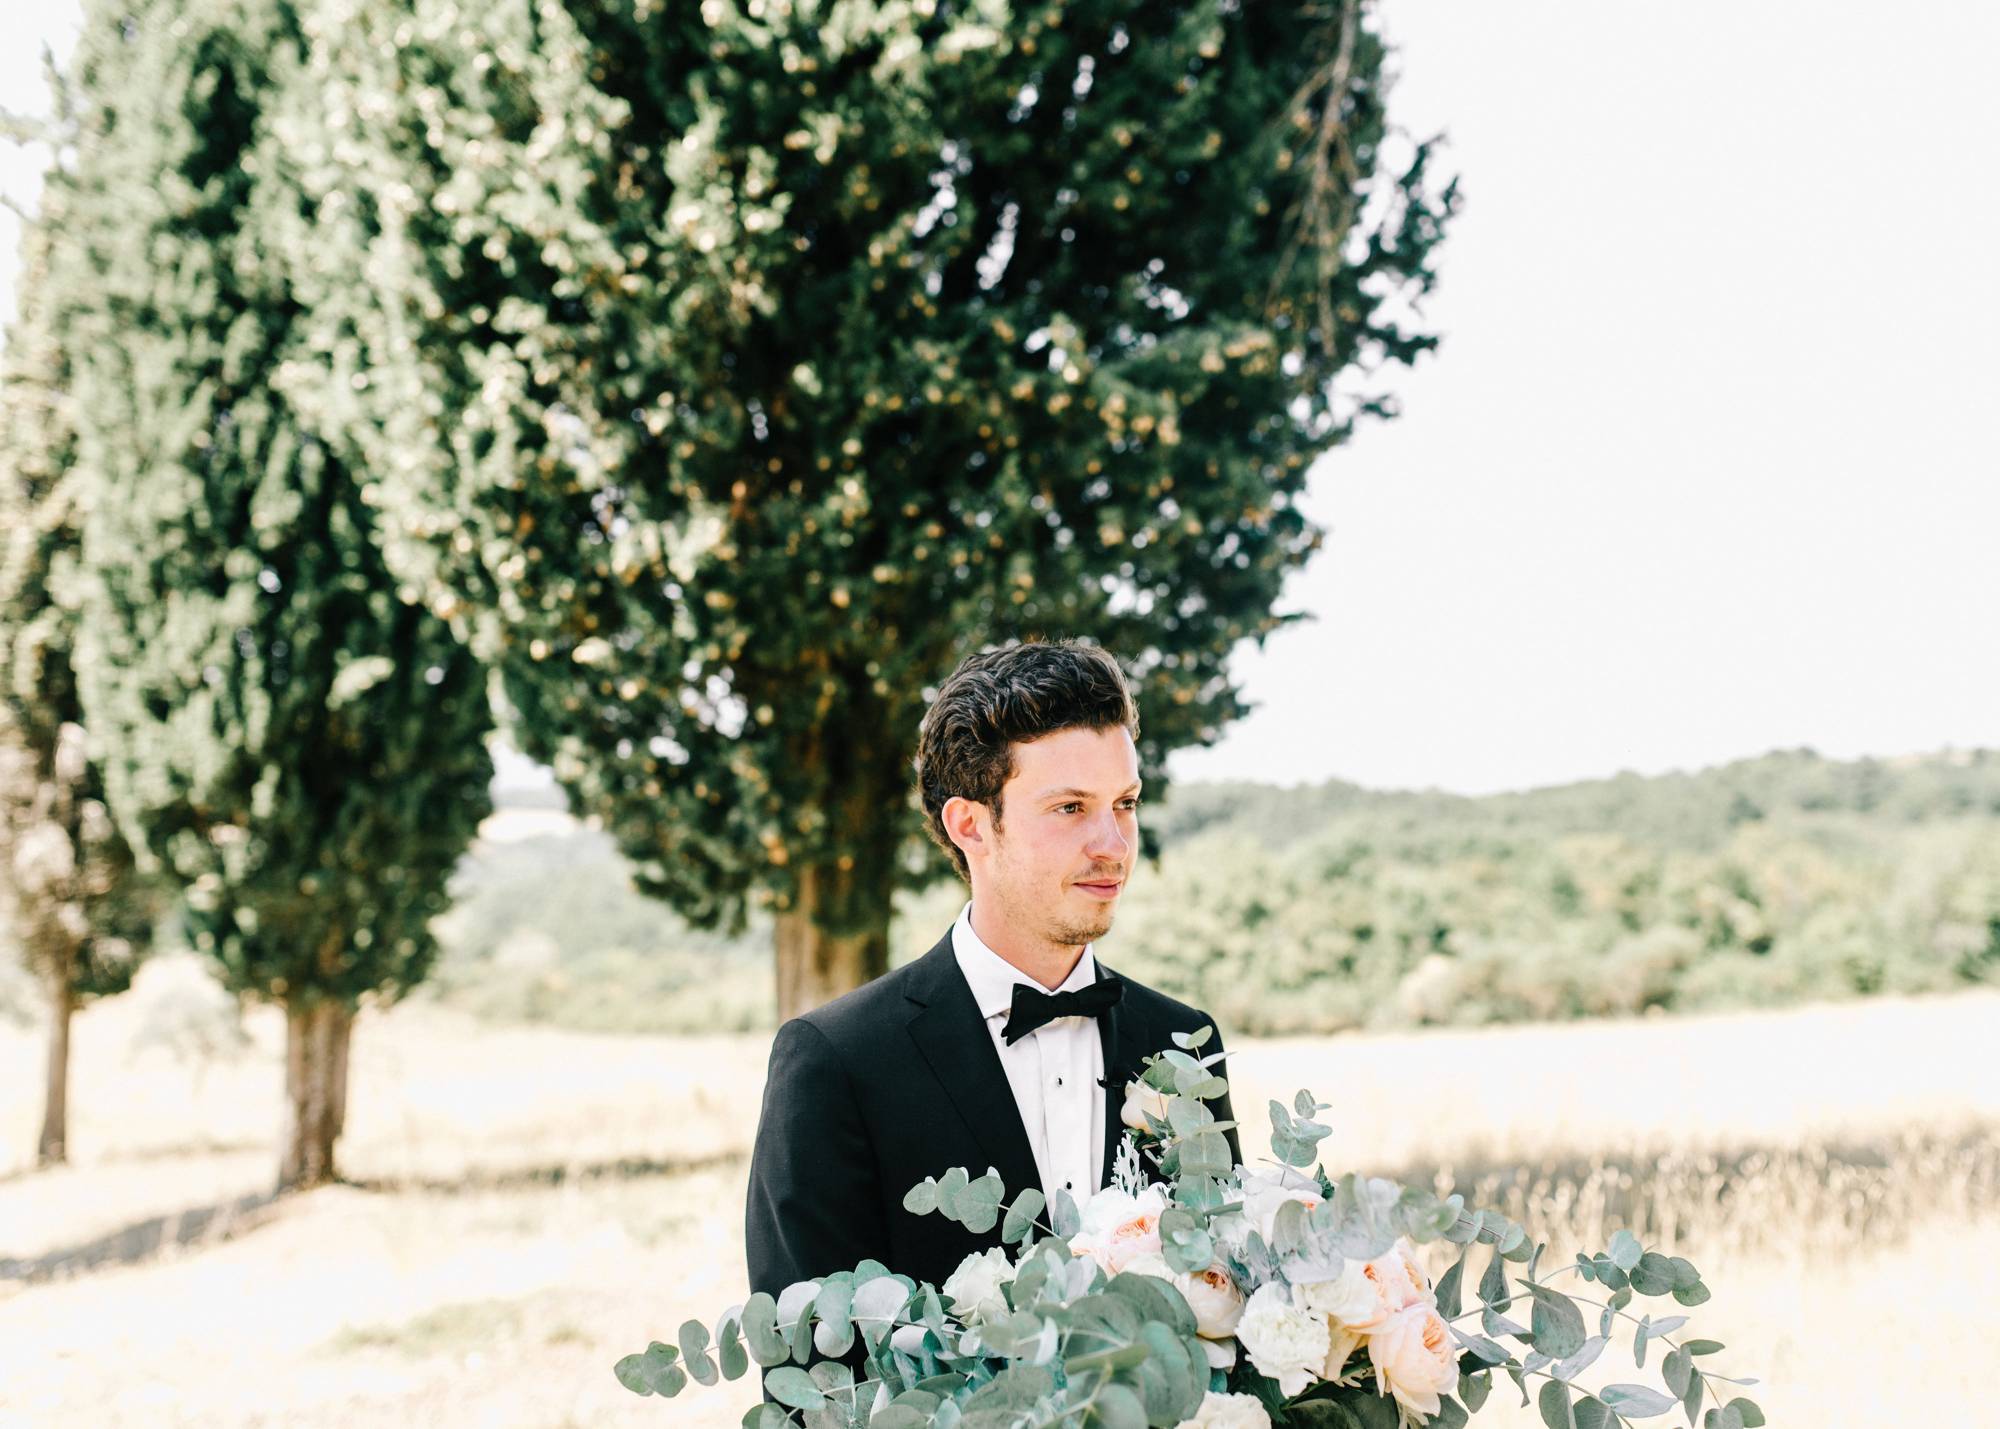 Wedding photographer Destination Wedding Tuscany Italy - Groom waiting for his bride